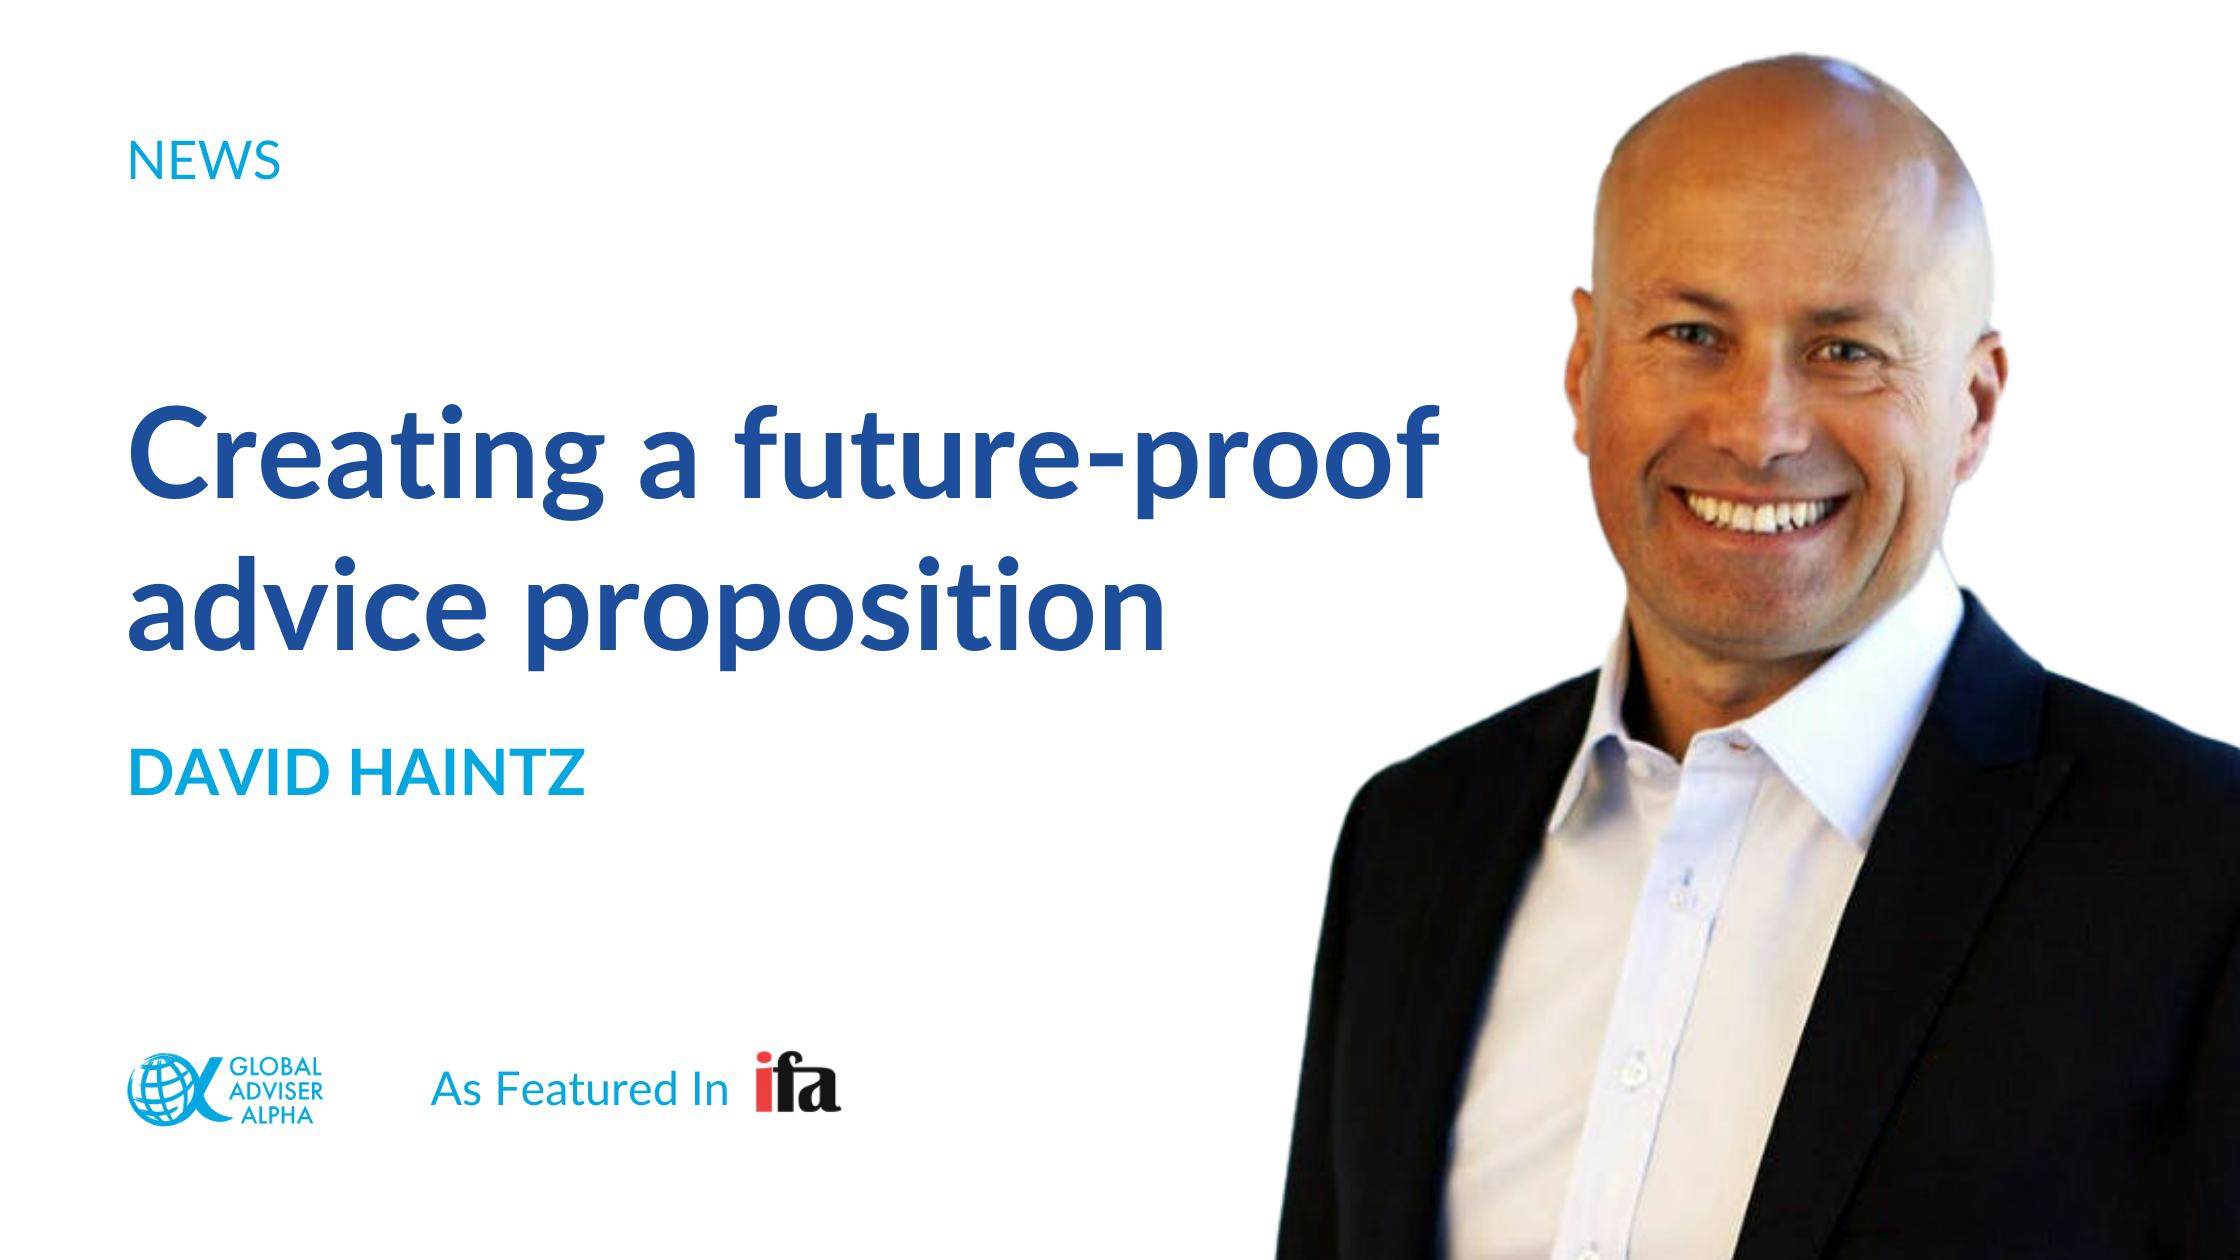 David Haintz - Creating a future-proof advice proposition